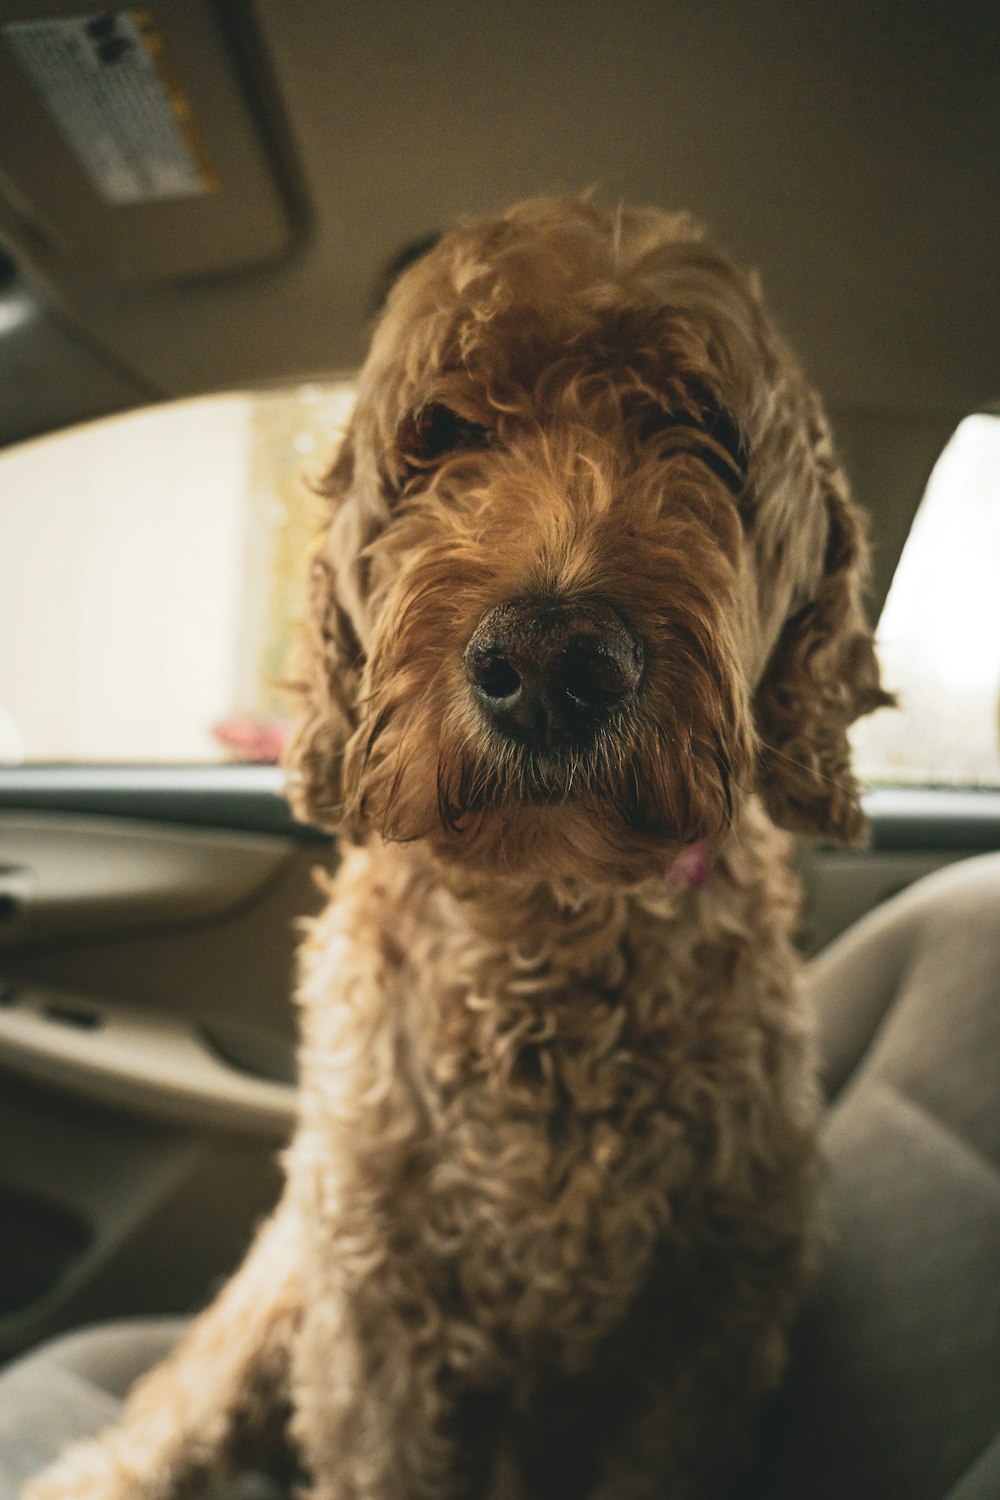 curly-haired brown dog inside vehicle photo – Free Animal Image on Unsplash